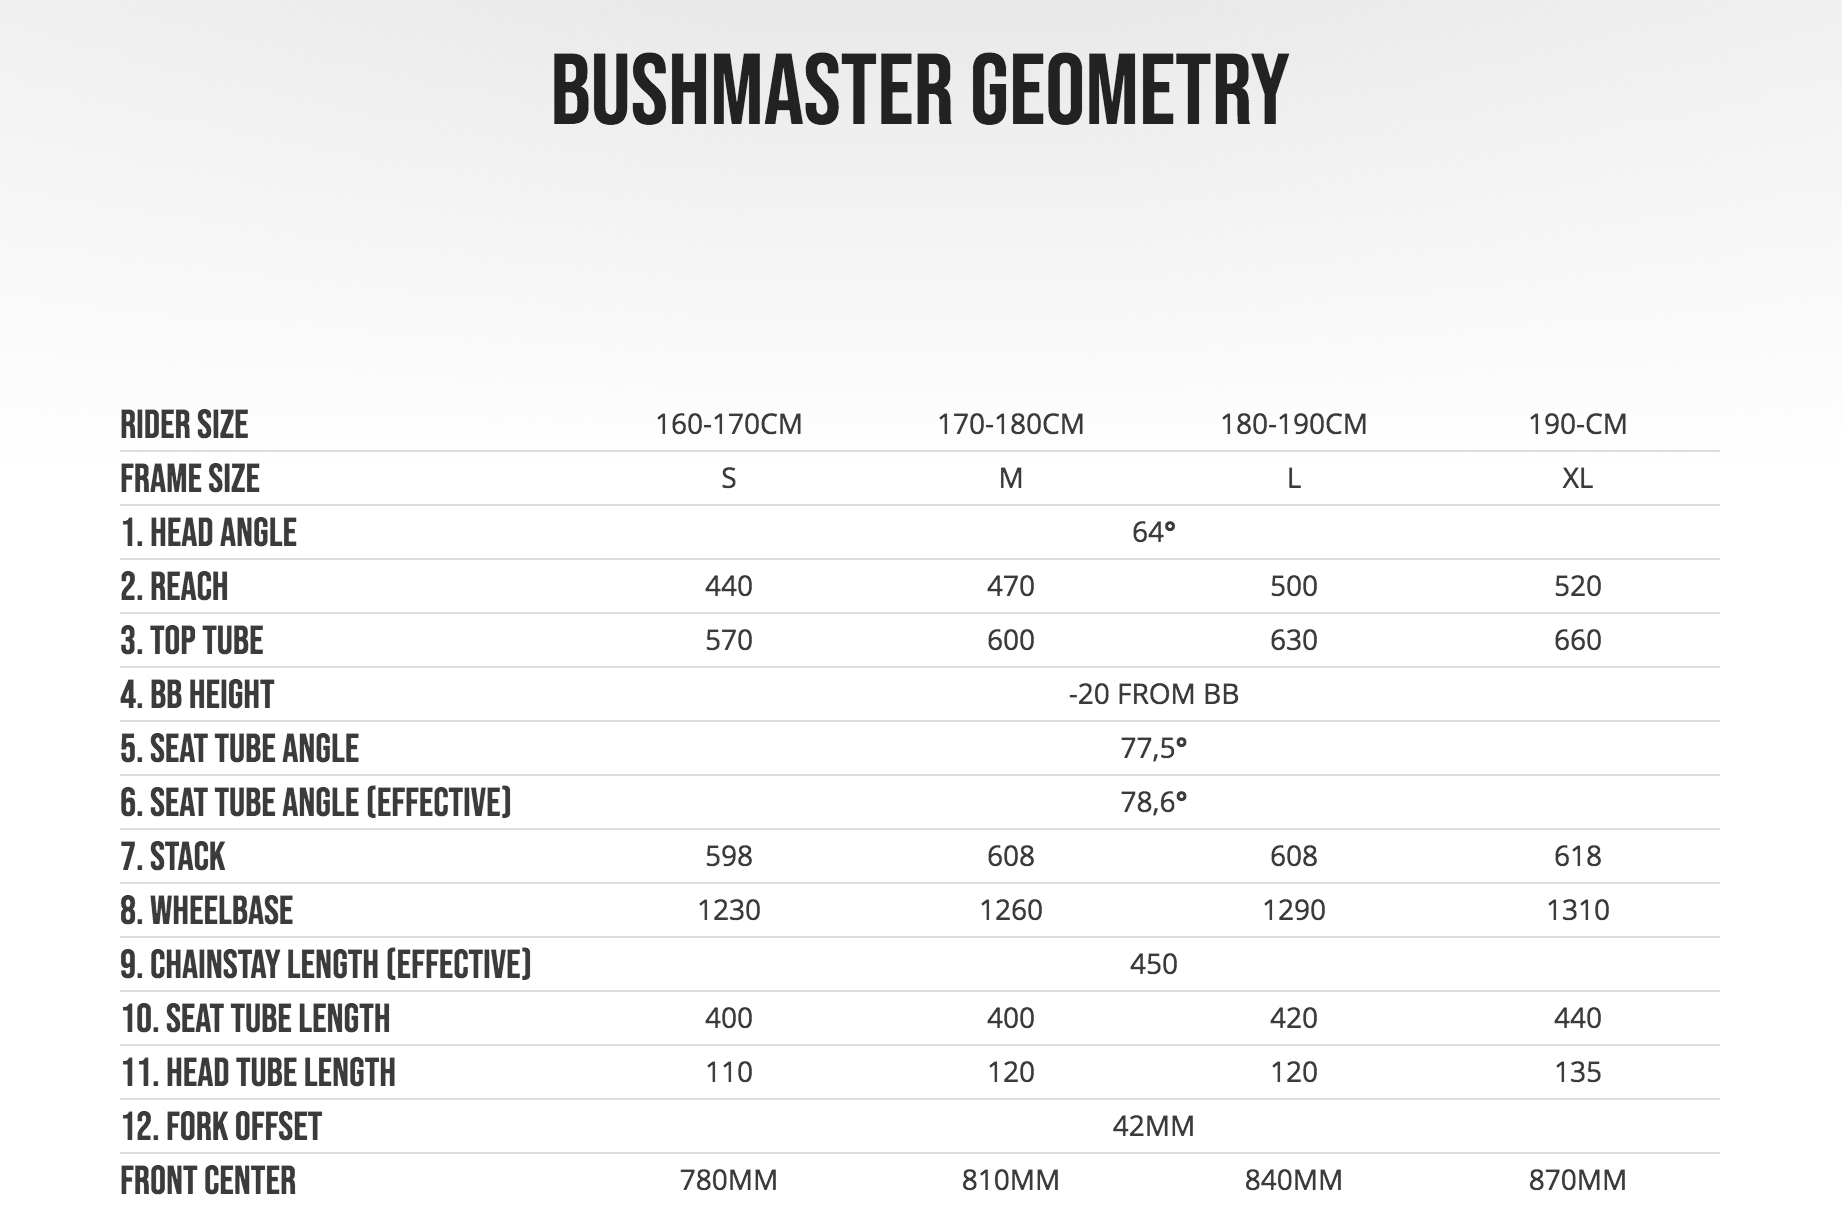 Pole Bushmaster Geometry